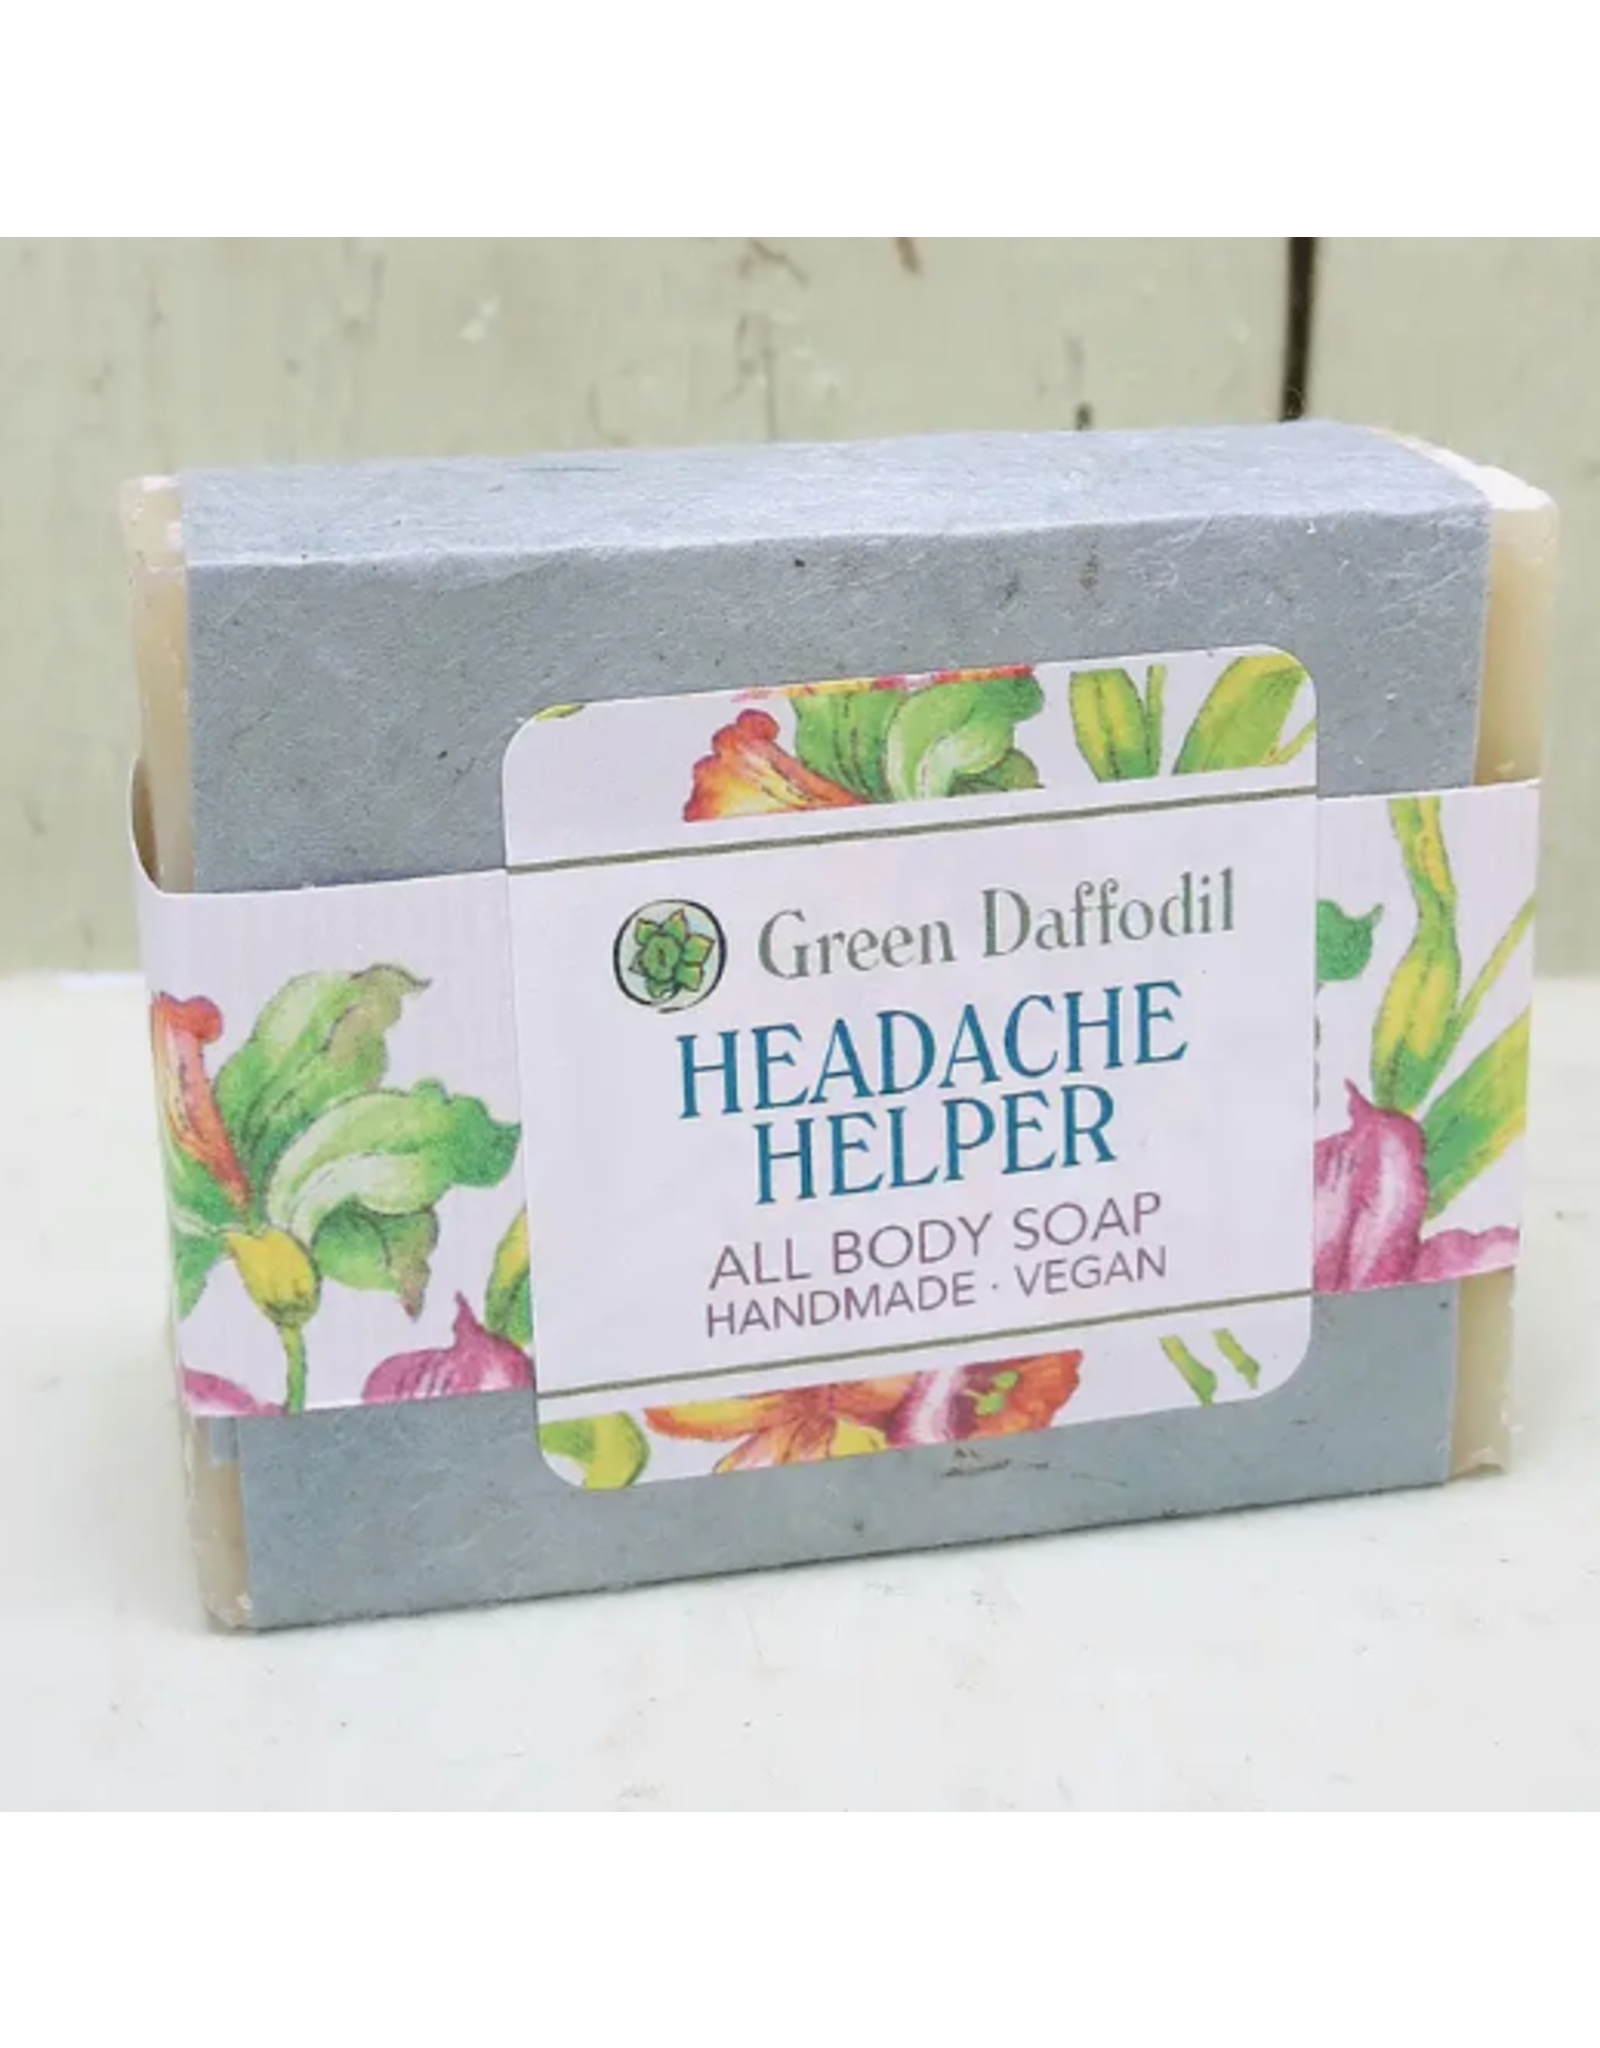 Green Daffodil Bath & Body Headache Helper Natural Handmade Bar Soap